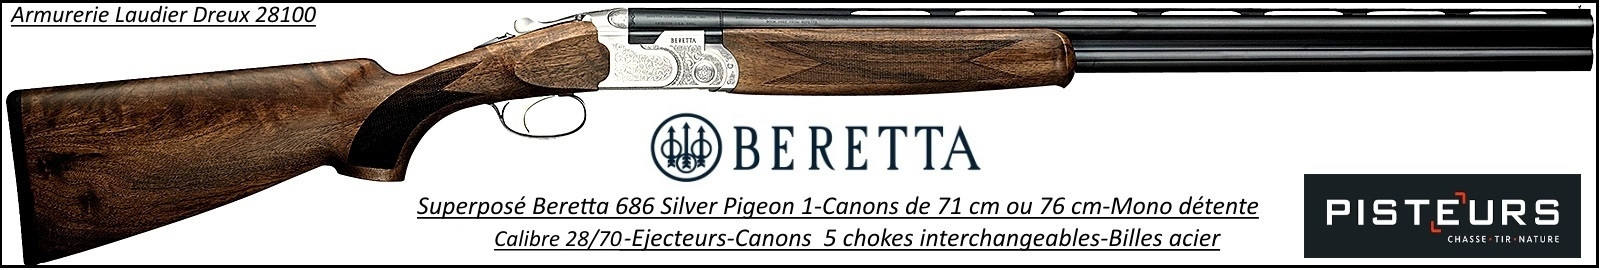 Superposé Beretta 686 Silver Pigeon 1 Calibre 28/70 Canons 71 cm chasse -Promotion-Ref  23284-37529